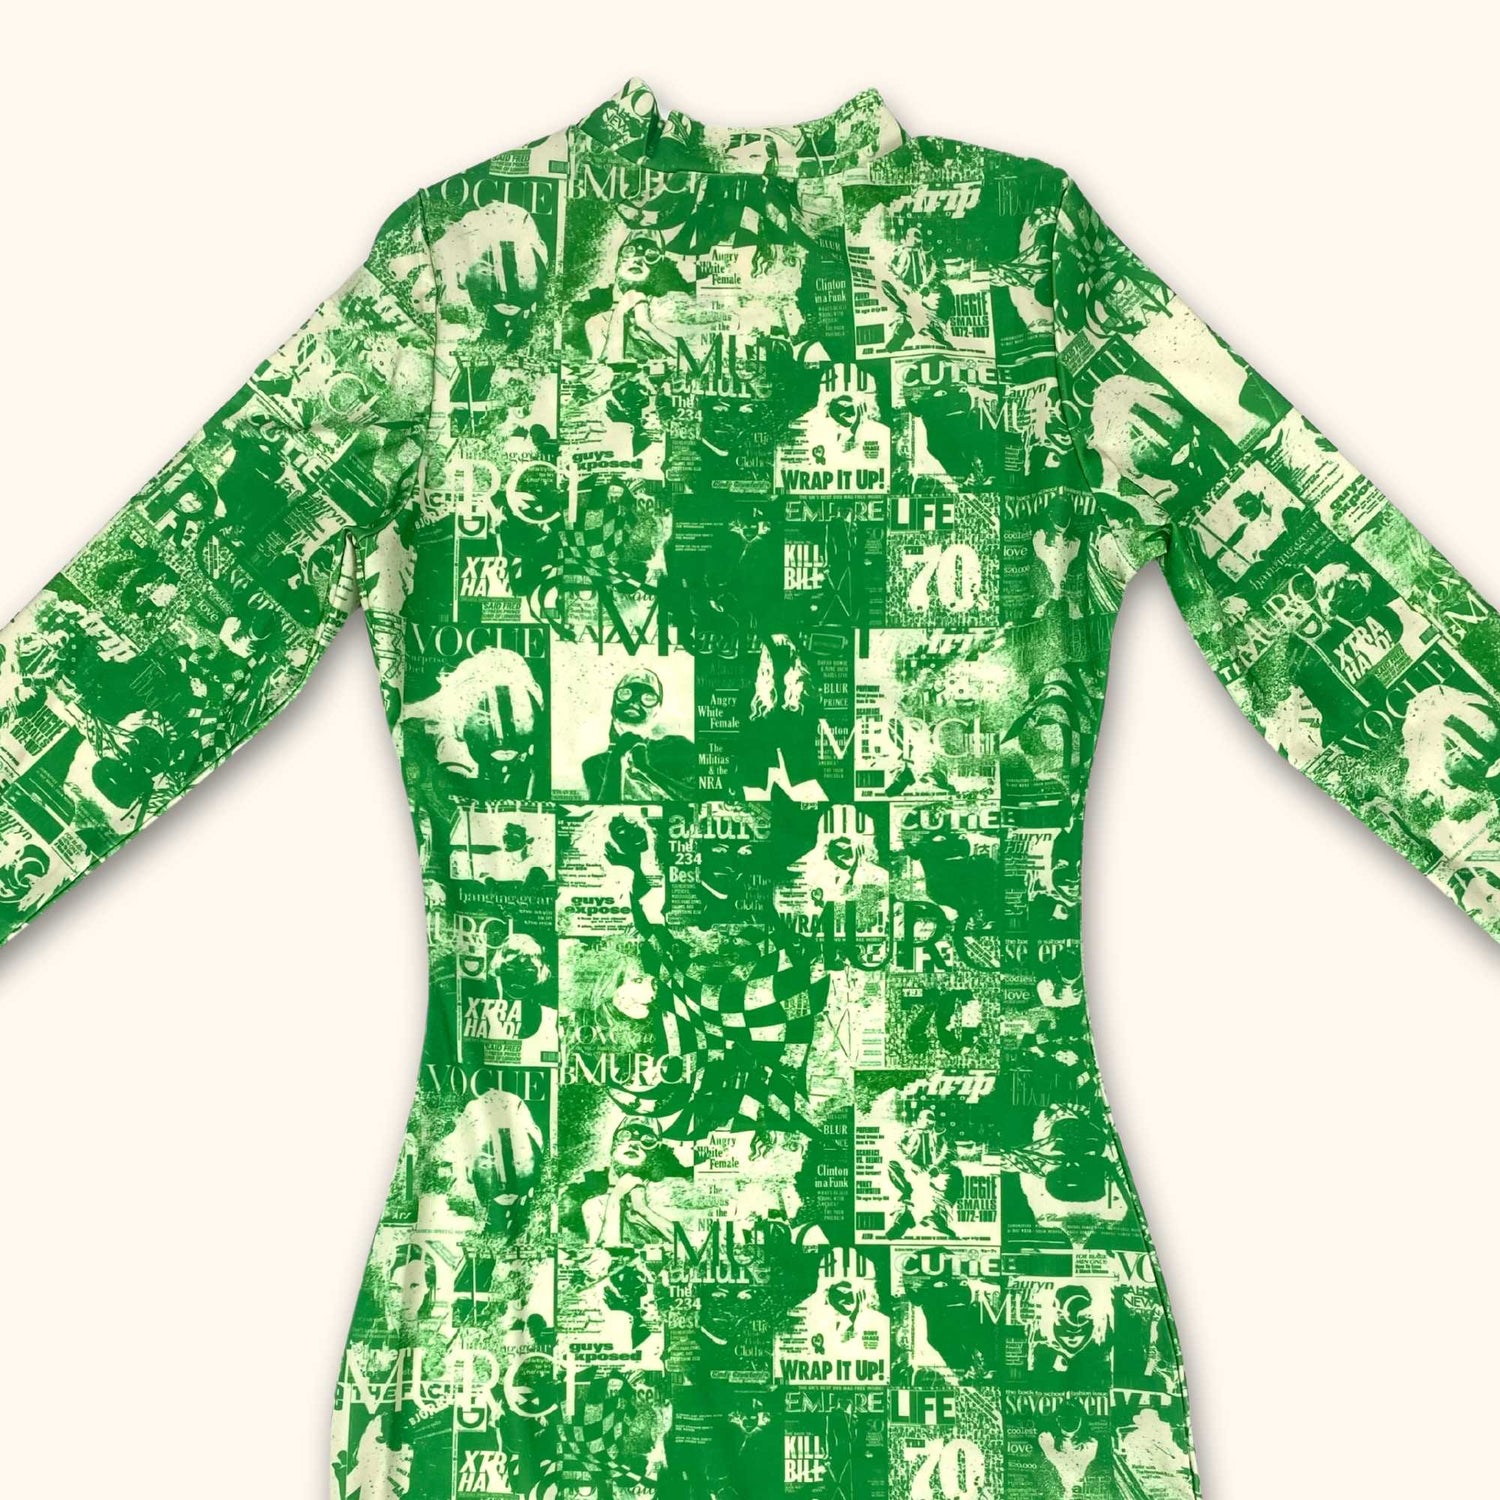 Murci Green Long Sleeve Bodycon Dress - Size 8 - Murci - Dresses